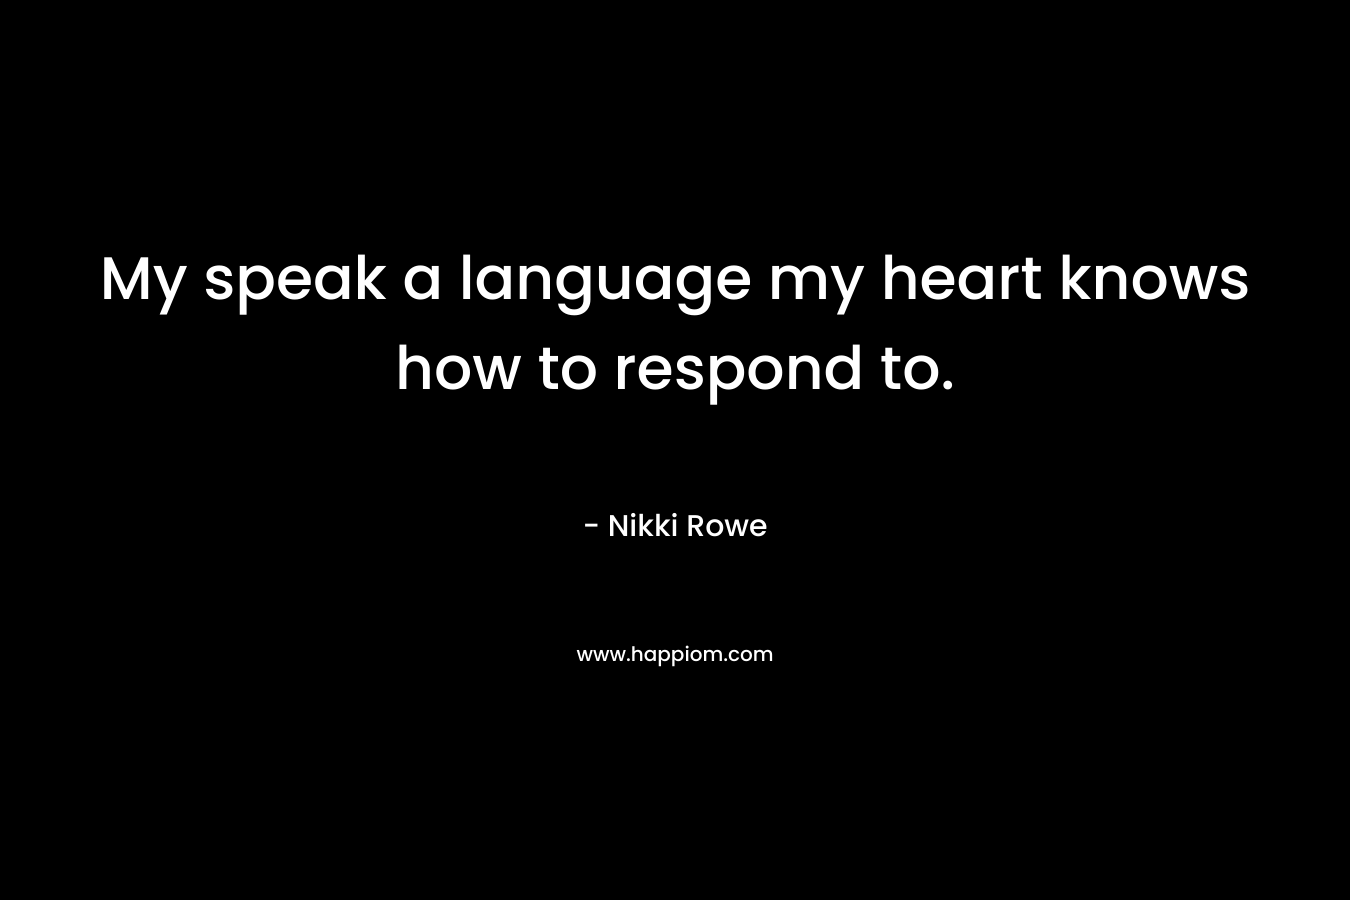 My speak a language my heart knows how to respond to. – Nikki Rowe